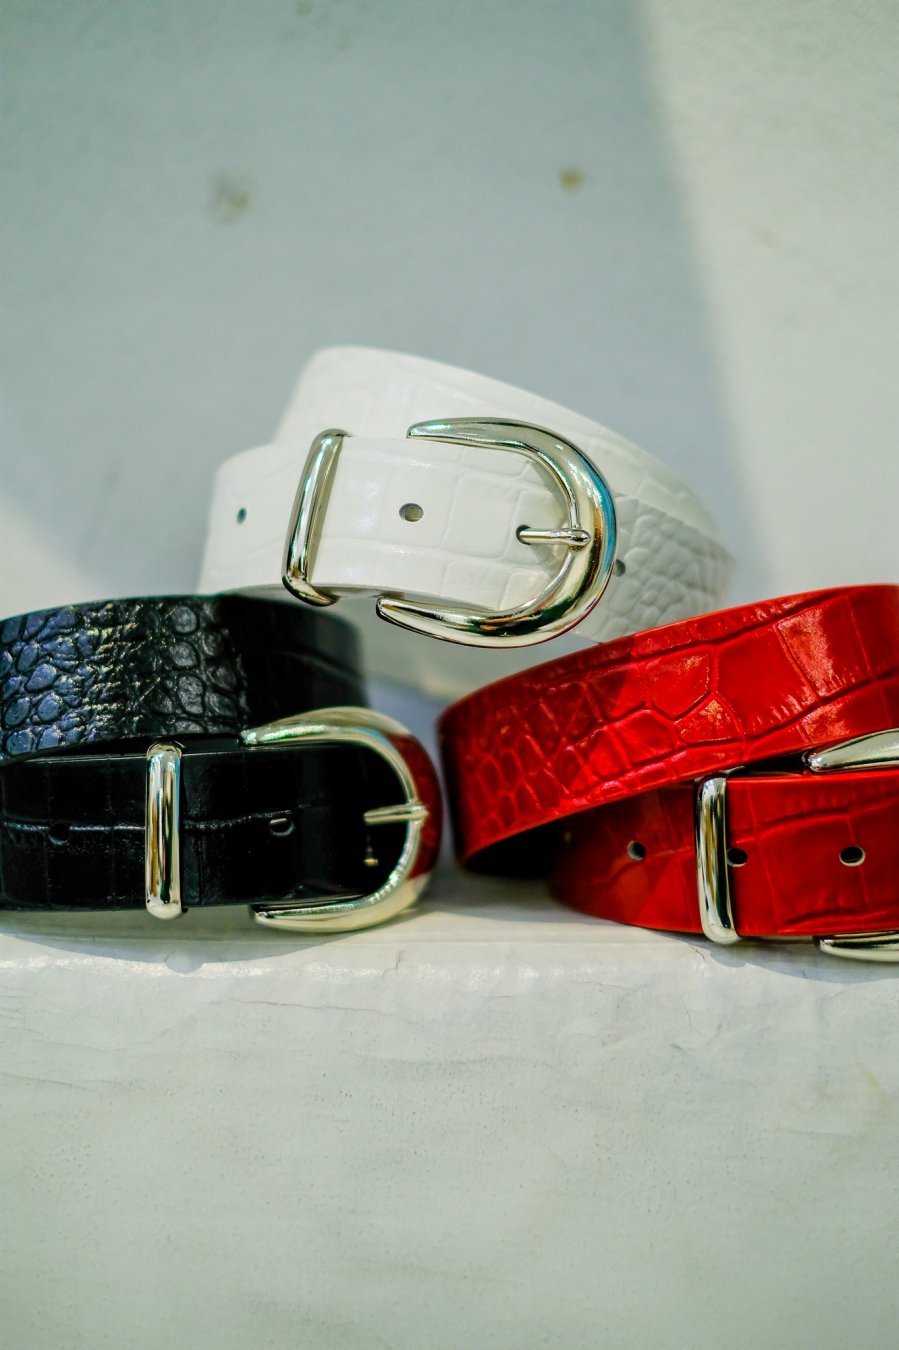 LITTLEBIG（リトルビッグ）のCroco Leather Belt（クロコベルト）の通販サイト-大阪 堀江 PALETTE art  alive（パレットアートアライヴ）-